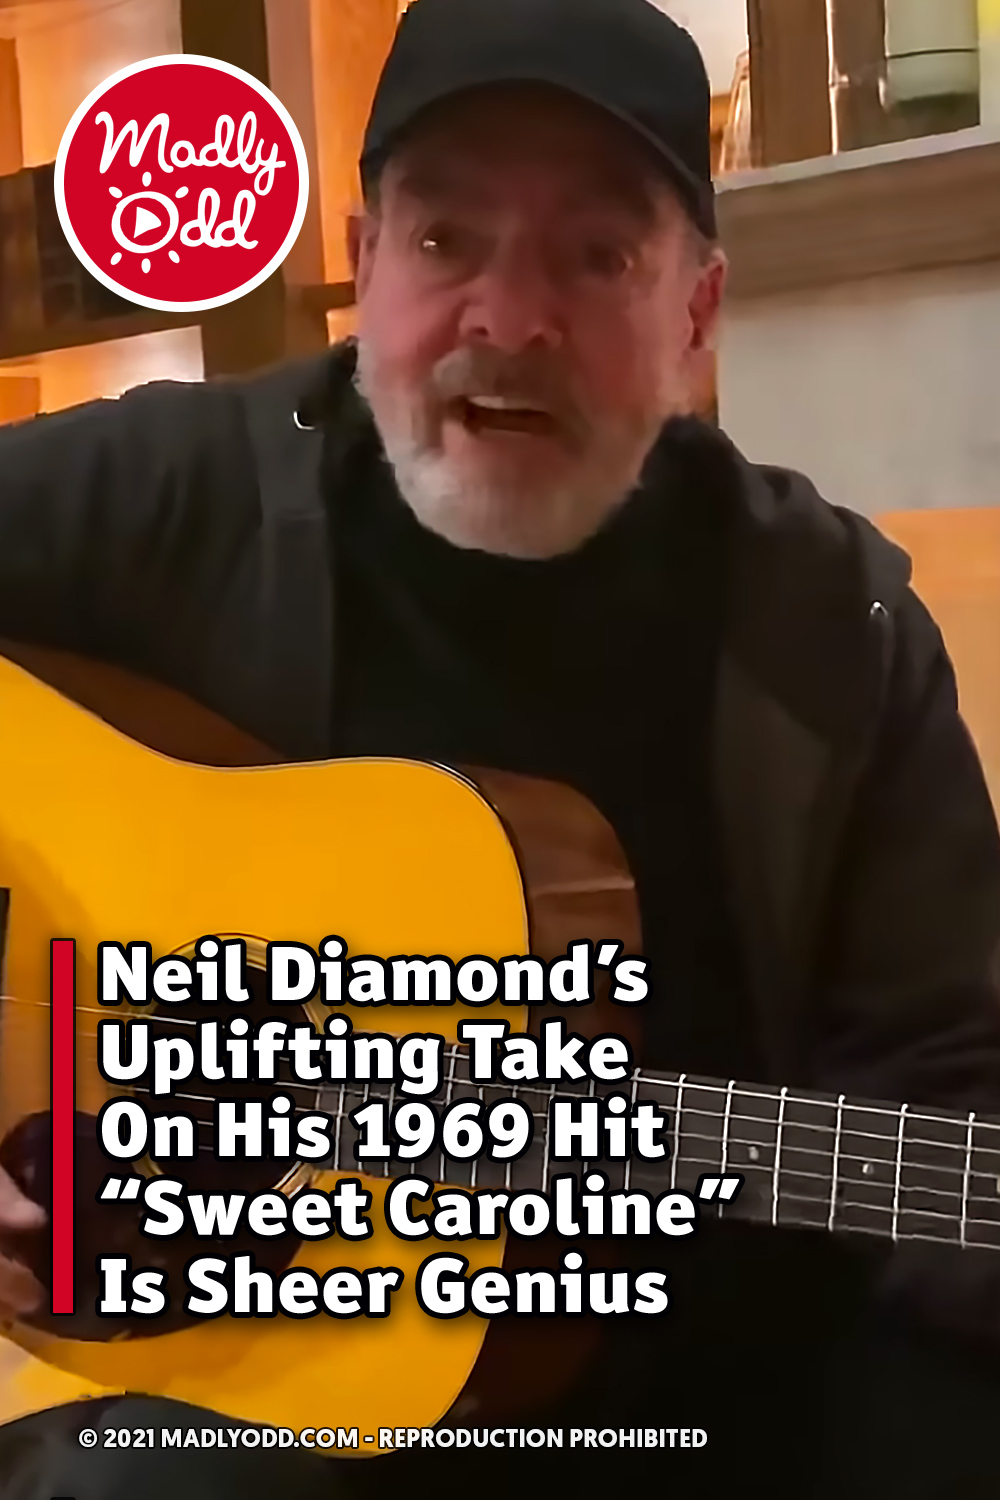 Neil Diamond’s Uplifting Take On His 1969 Hit “Sweet Caroline” Is Sheer Genius